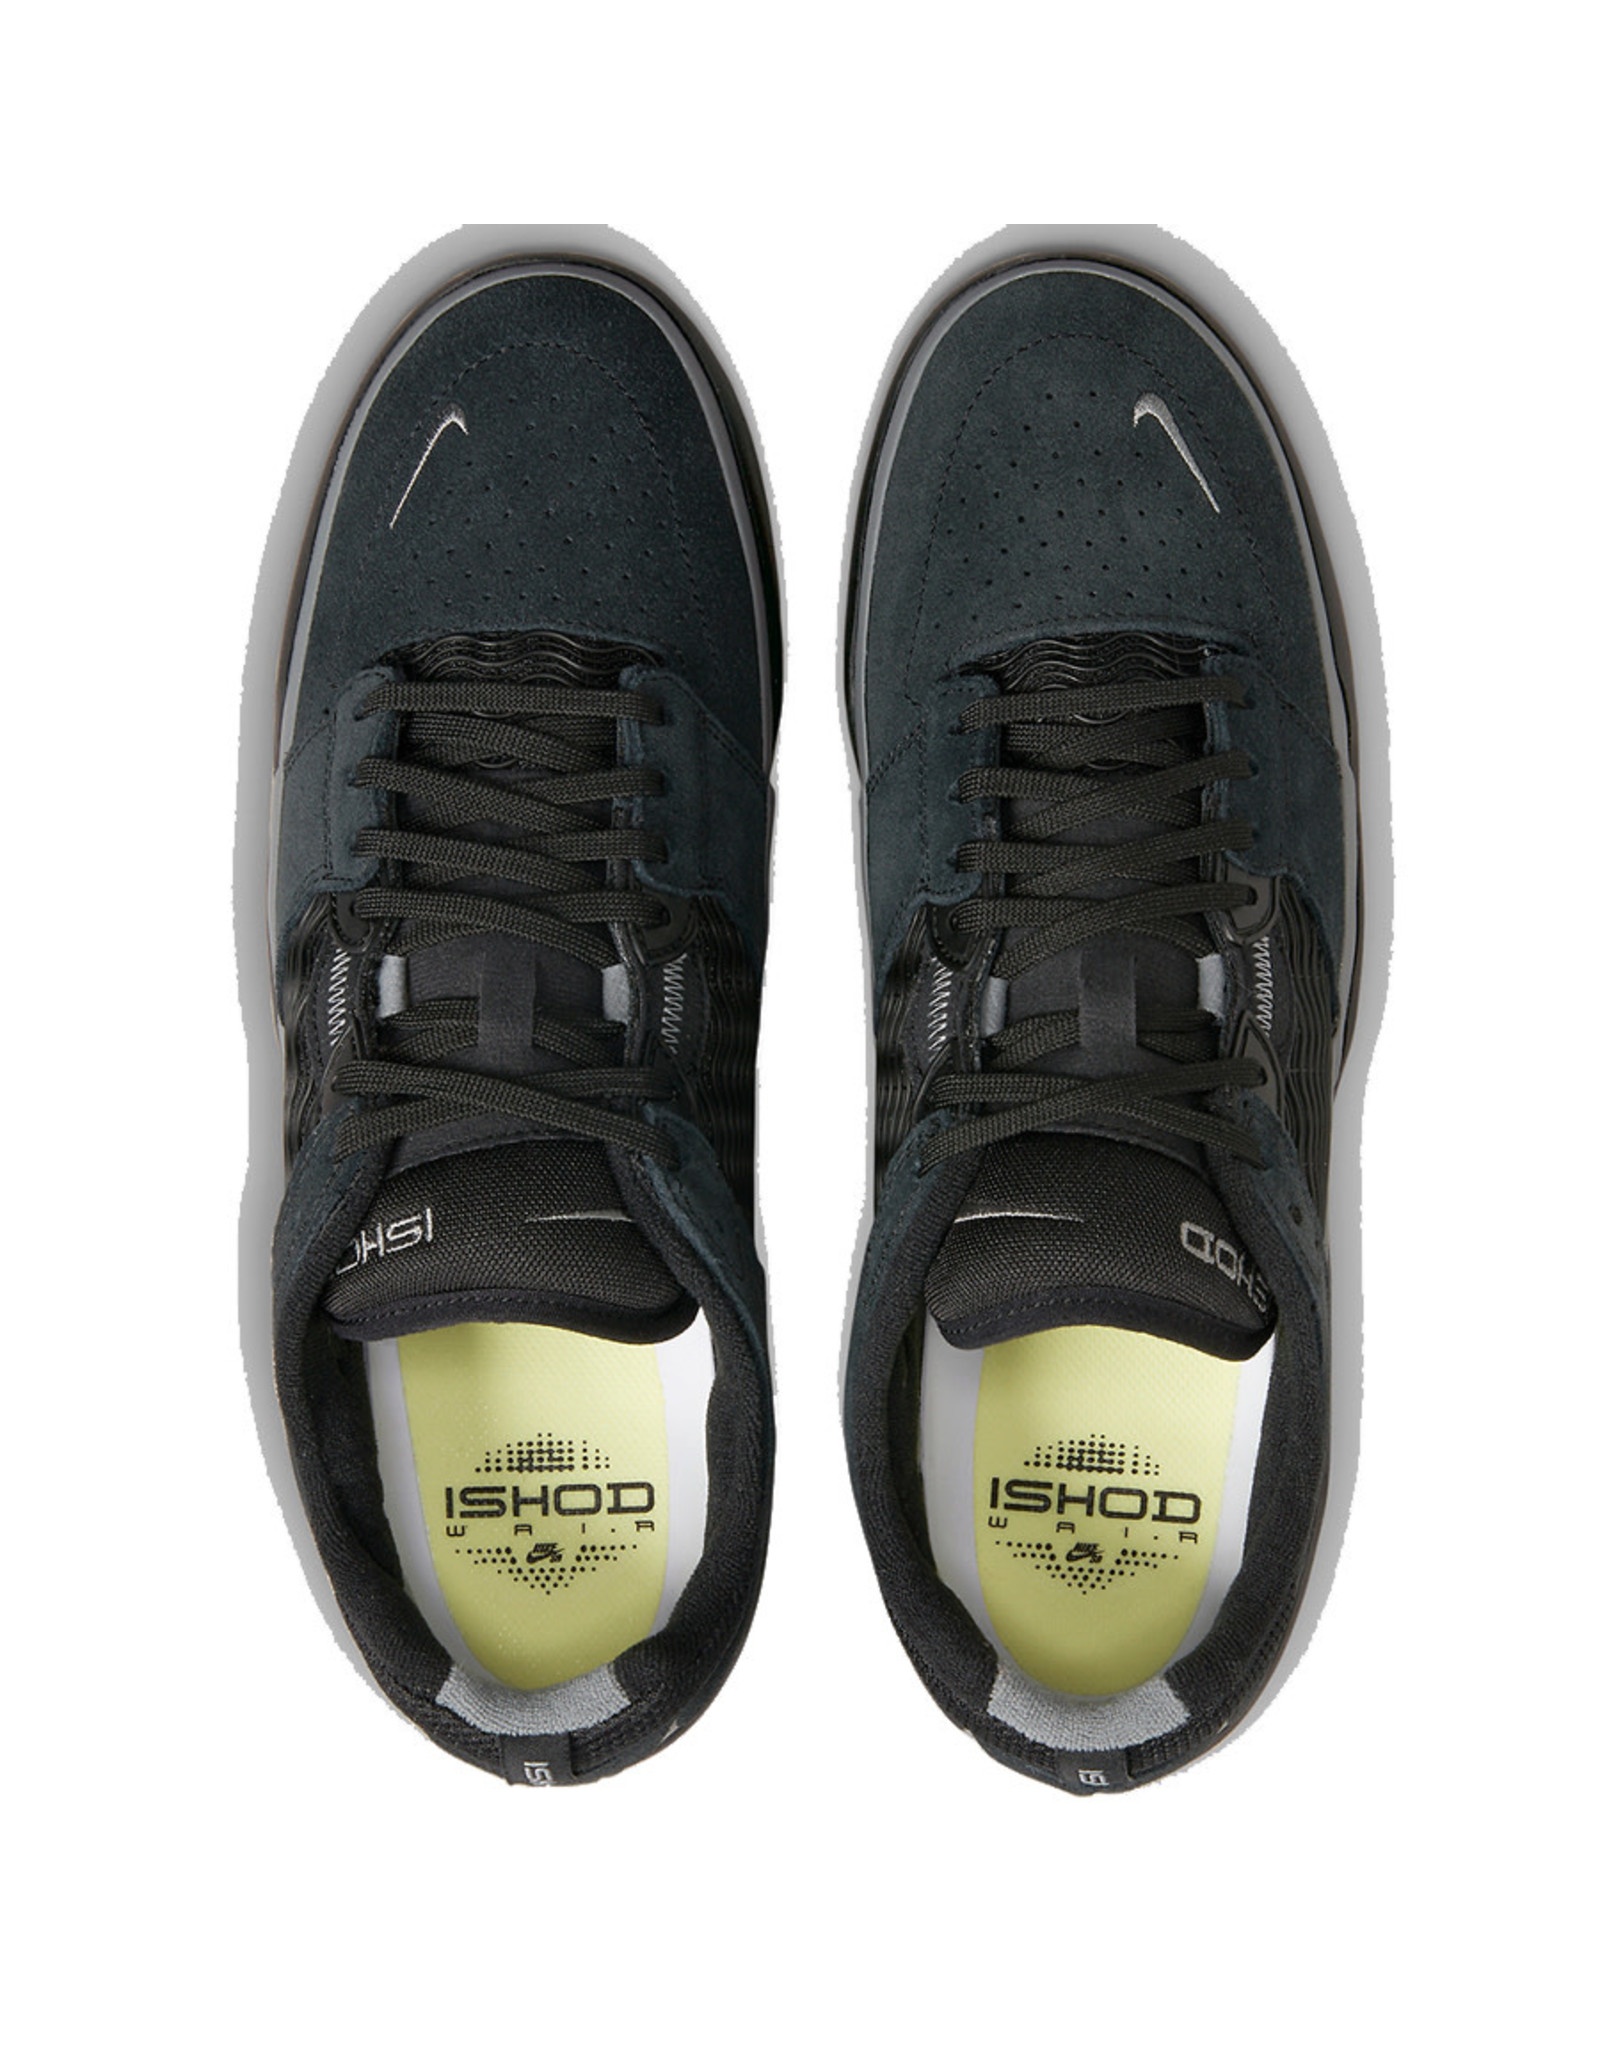 Nike SB Nike SB Shoe Ishod Pro (Black/Grey)